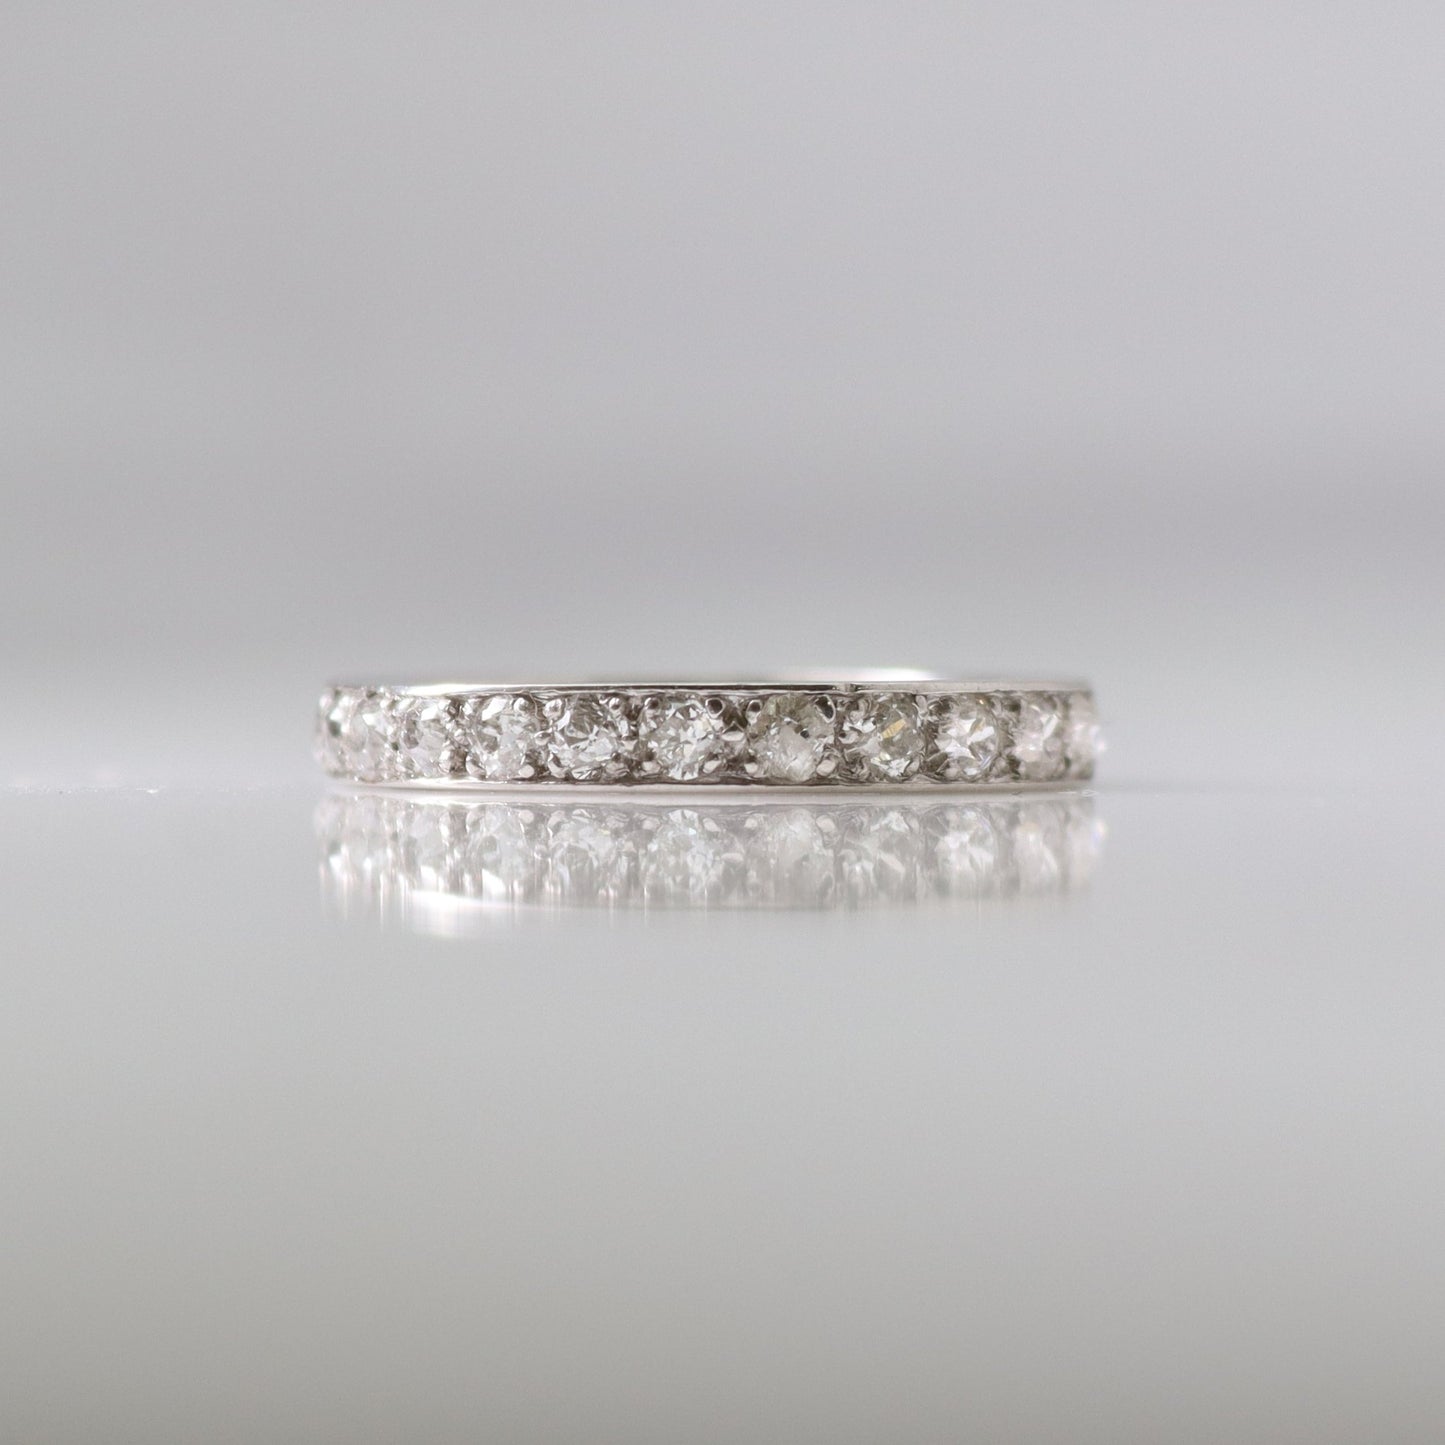 1940s Vintage Platinum Diamond Eternity Ring 1.75 carats - Friar House